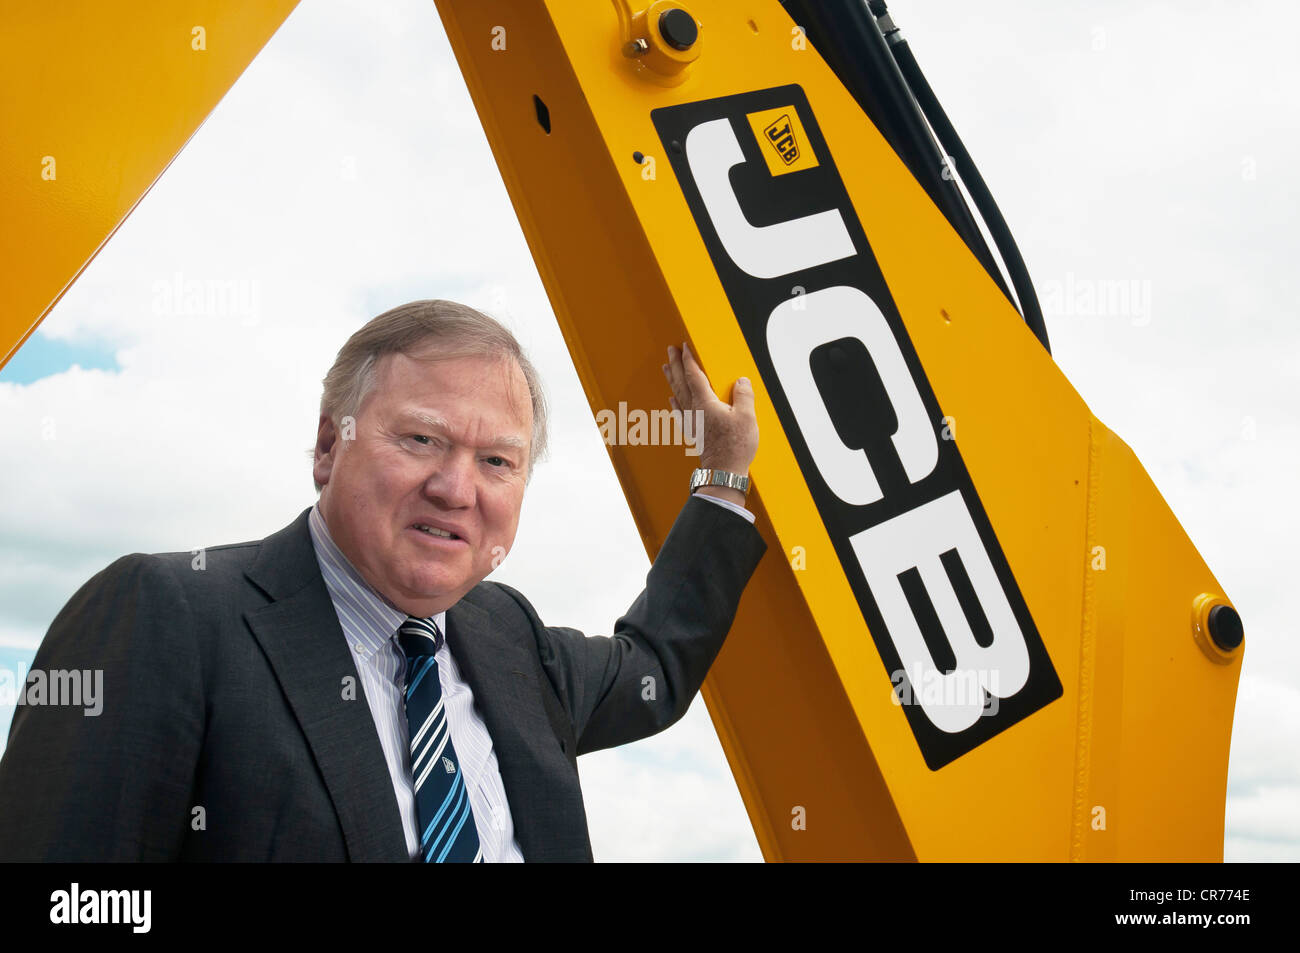 JCB Chairman Sir Anthony Bamford leaning on contruction machine Stock Photo